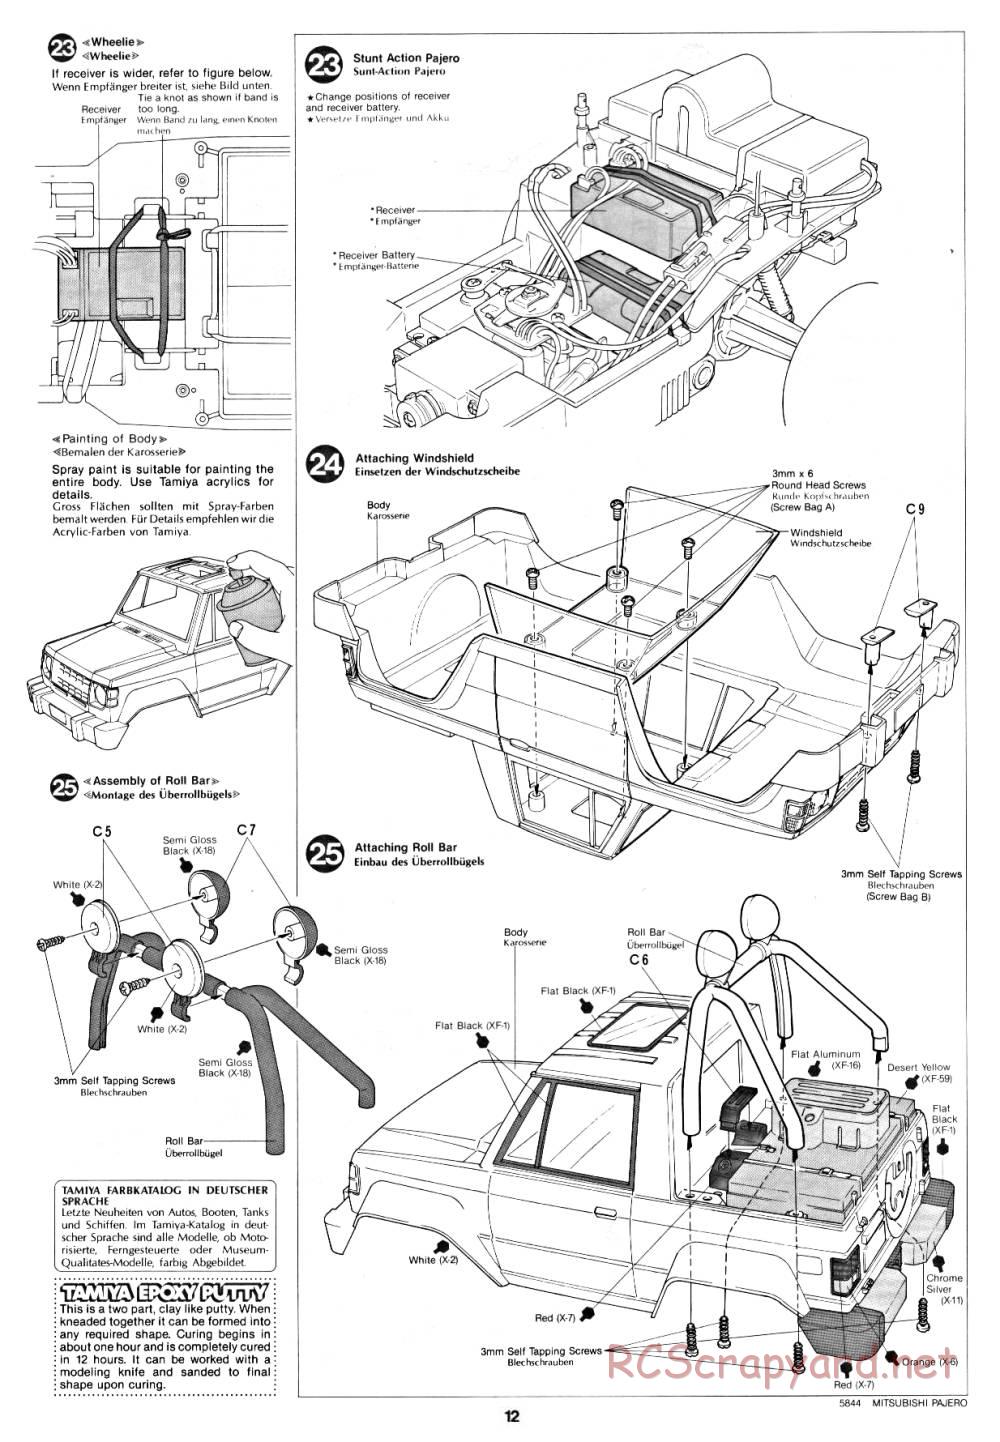 Tamiya - Mitsubishi Pajero - 58044 - Manual - Page 12